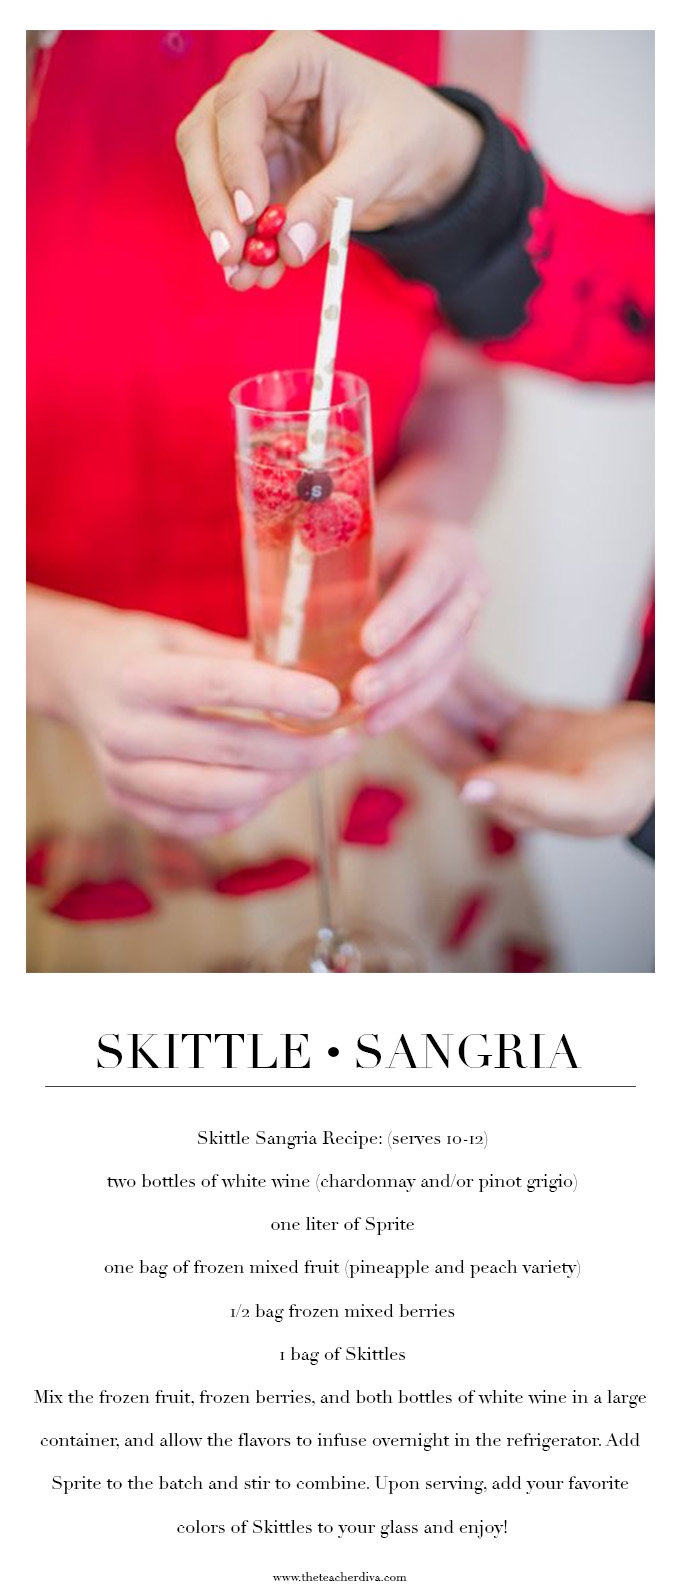 Skittle Sangria